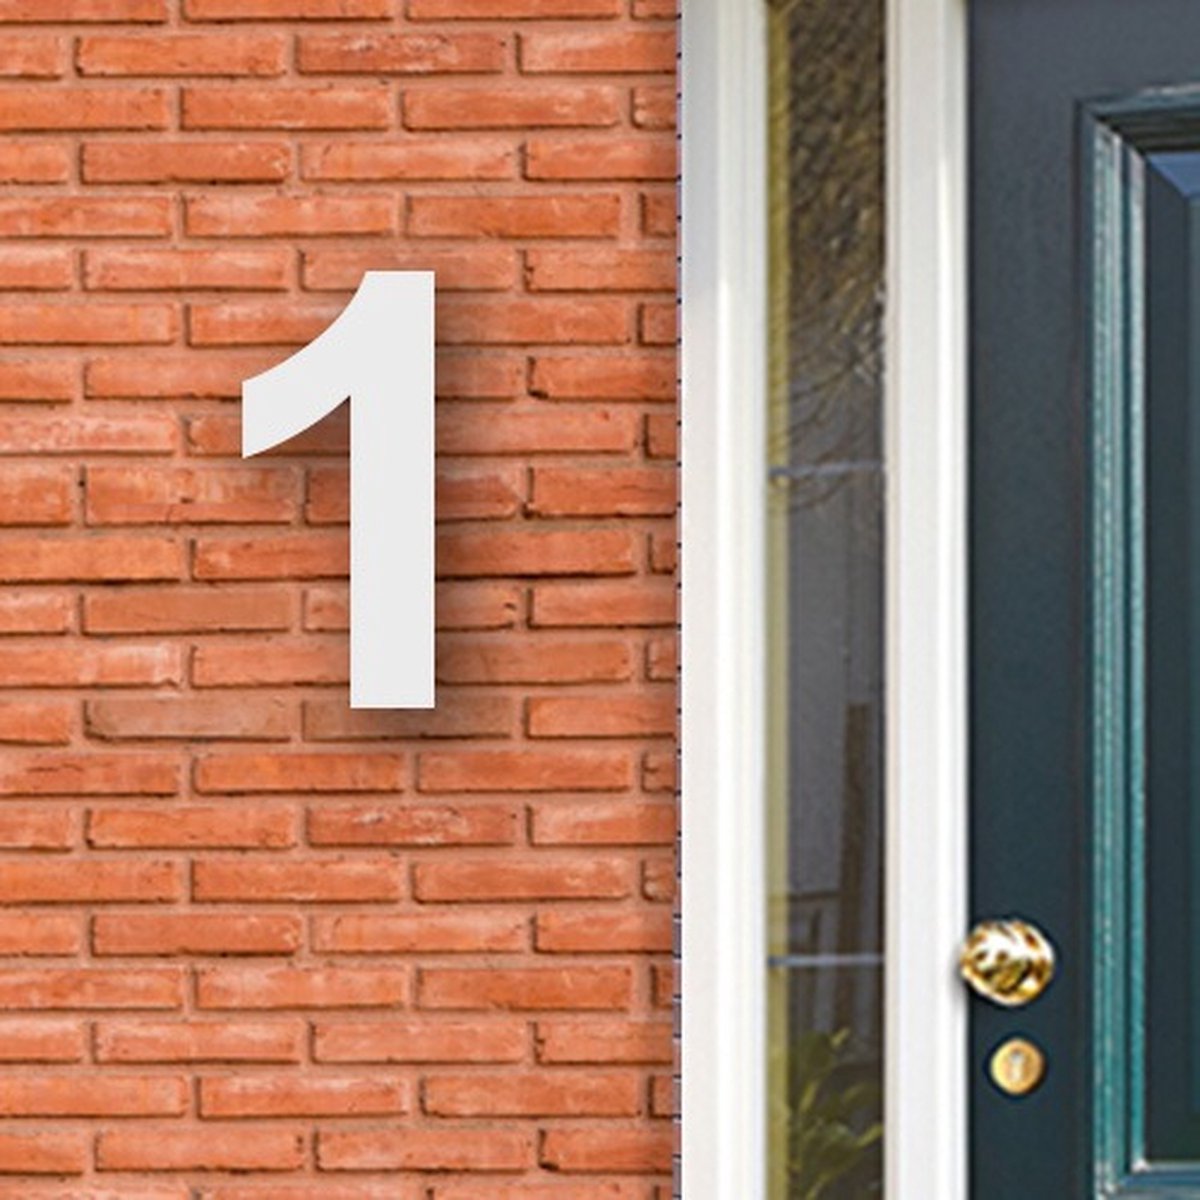 Huisnummer Acryl wit, cijfer 1, Hoogte 16cm - Huisnummers - Huisnummer wit - Huisnummer modern - Gratis verzending!